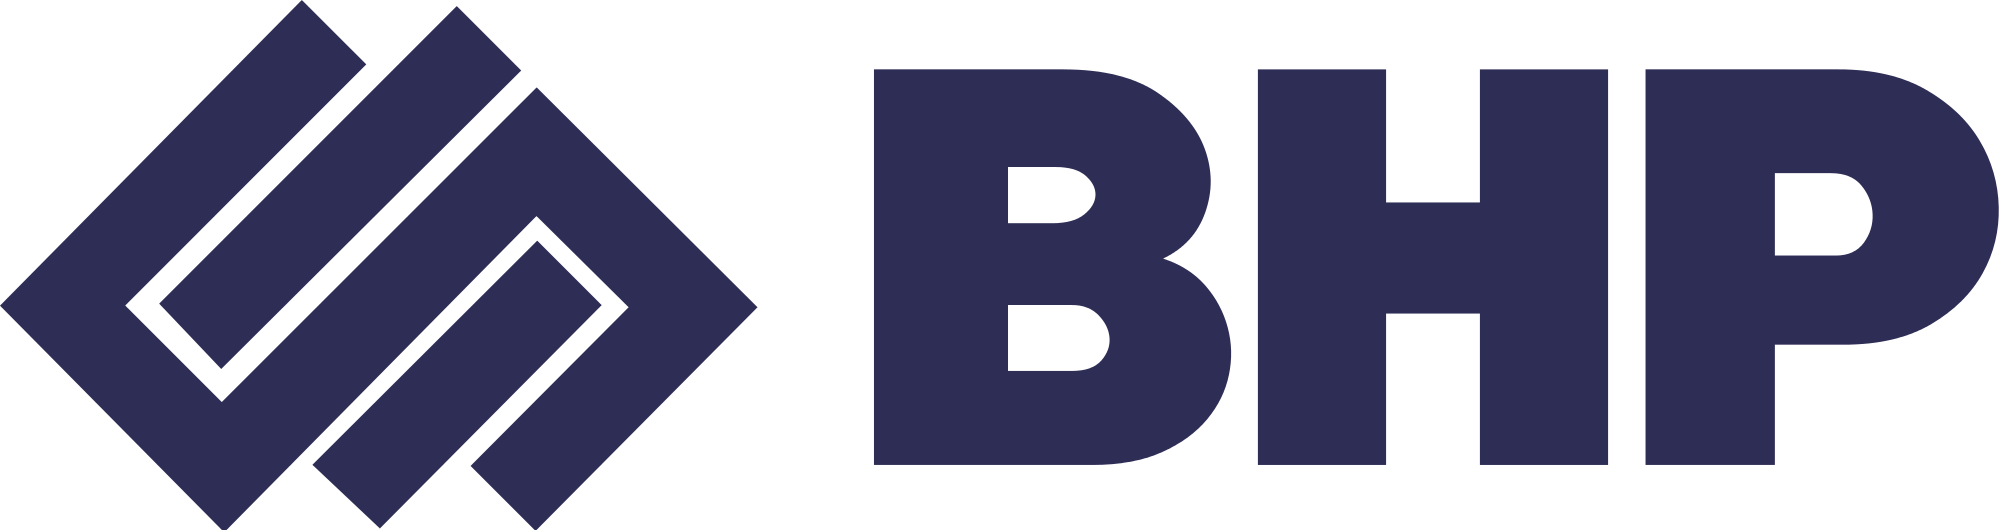 BHP Logo - Image - BHP Logo (vector).svg.png | Logopedia | FANDOM powered by Wikia